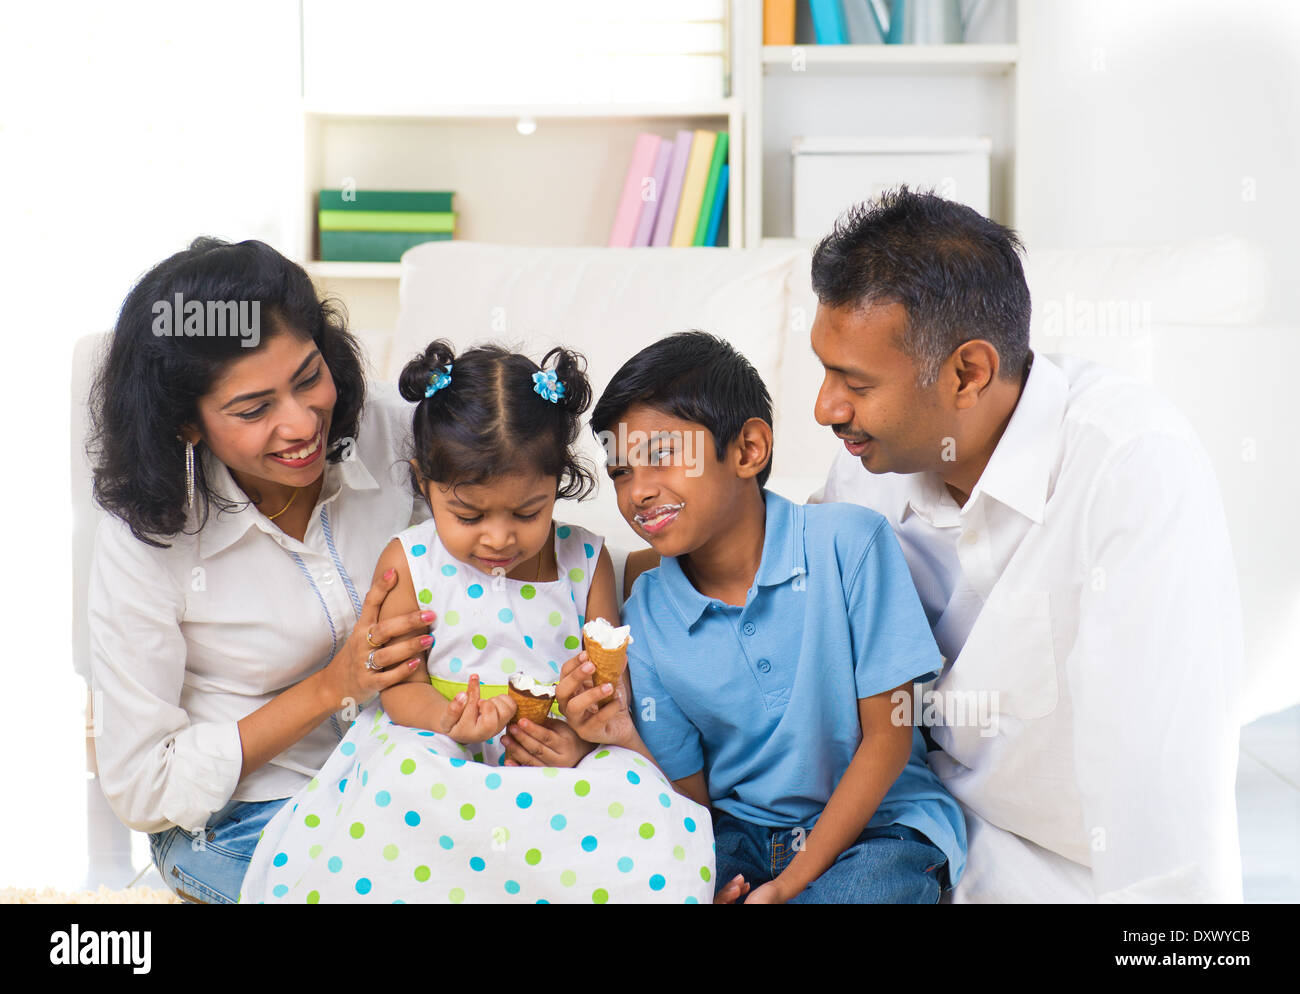 happy indian family enjoying eating ice cream indoor Stock Photo